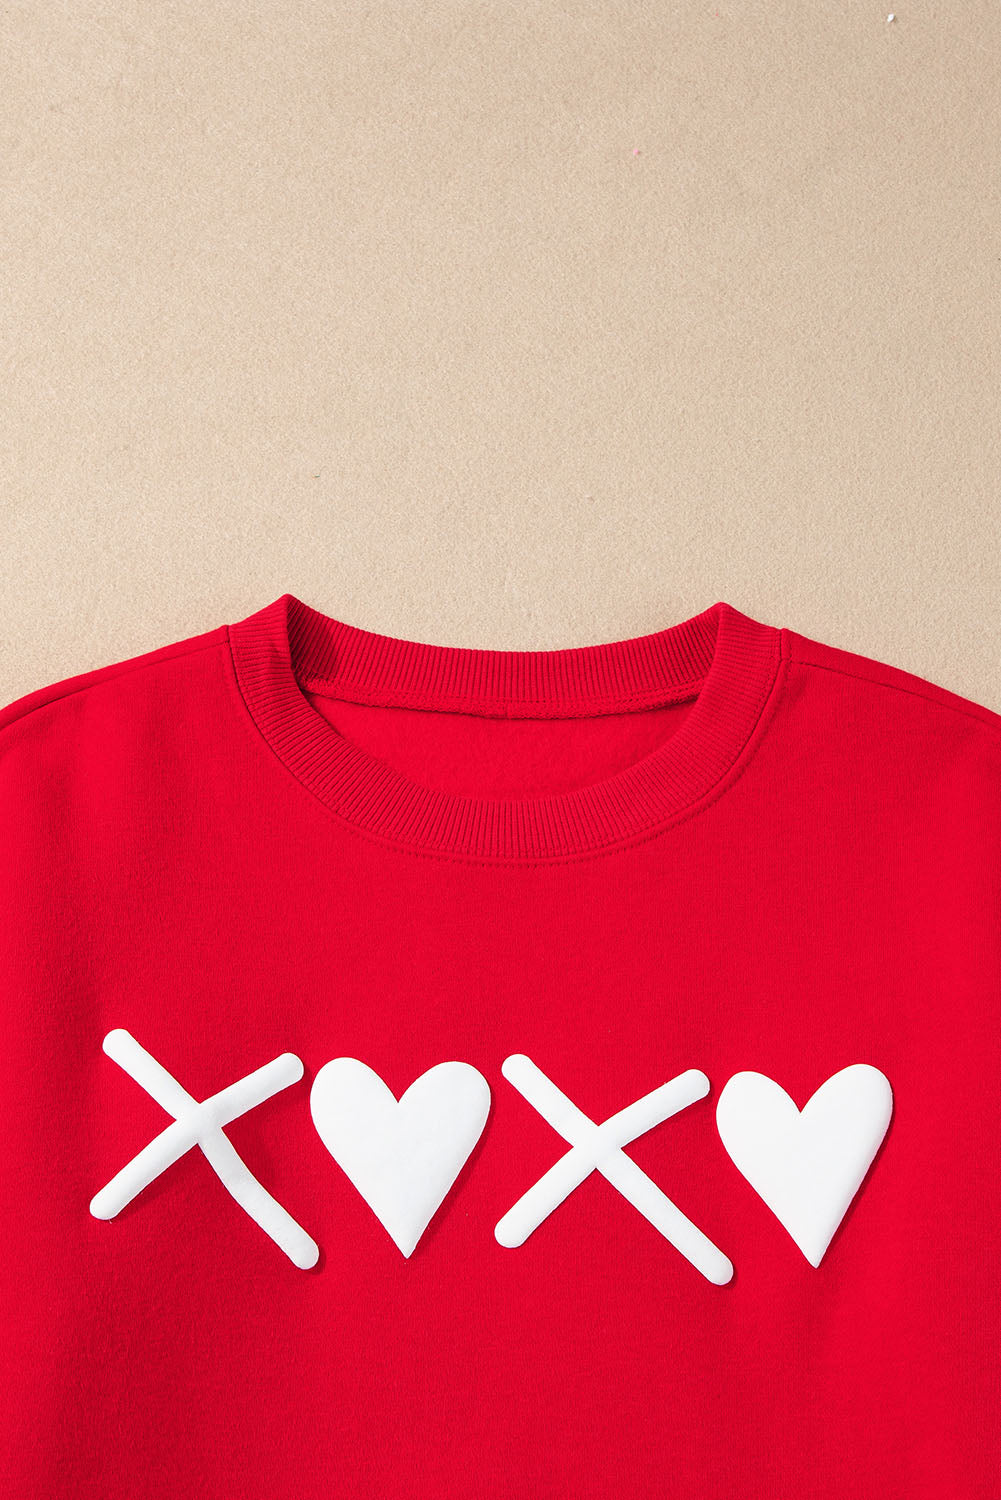 - Puff XOXO Print Valentines Heart Sweatshirt - women's sweatshirt at TFC&H Co.